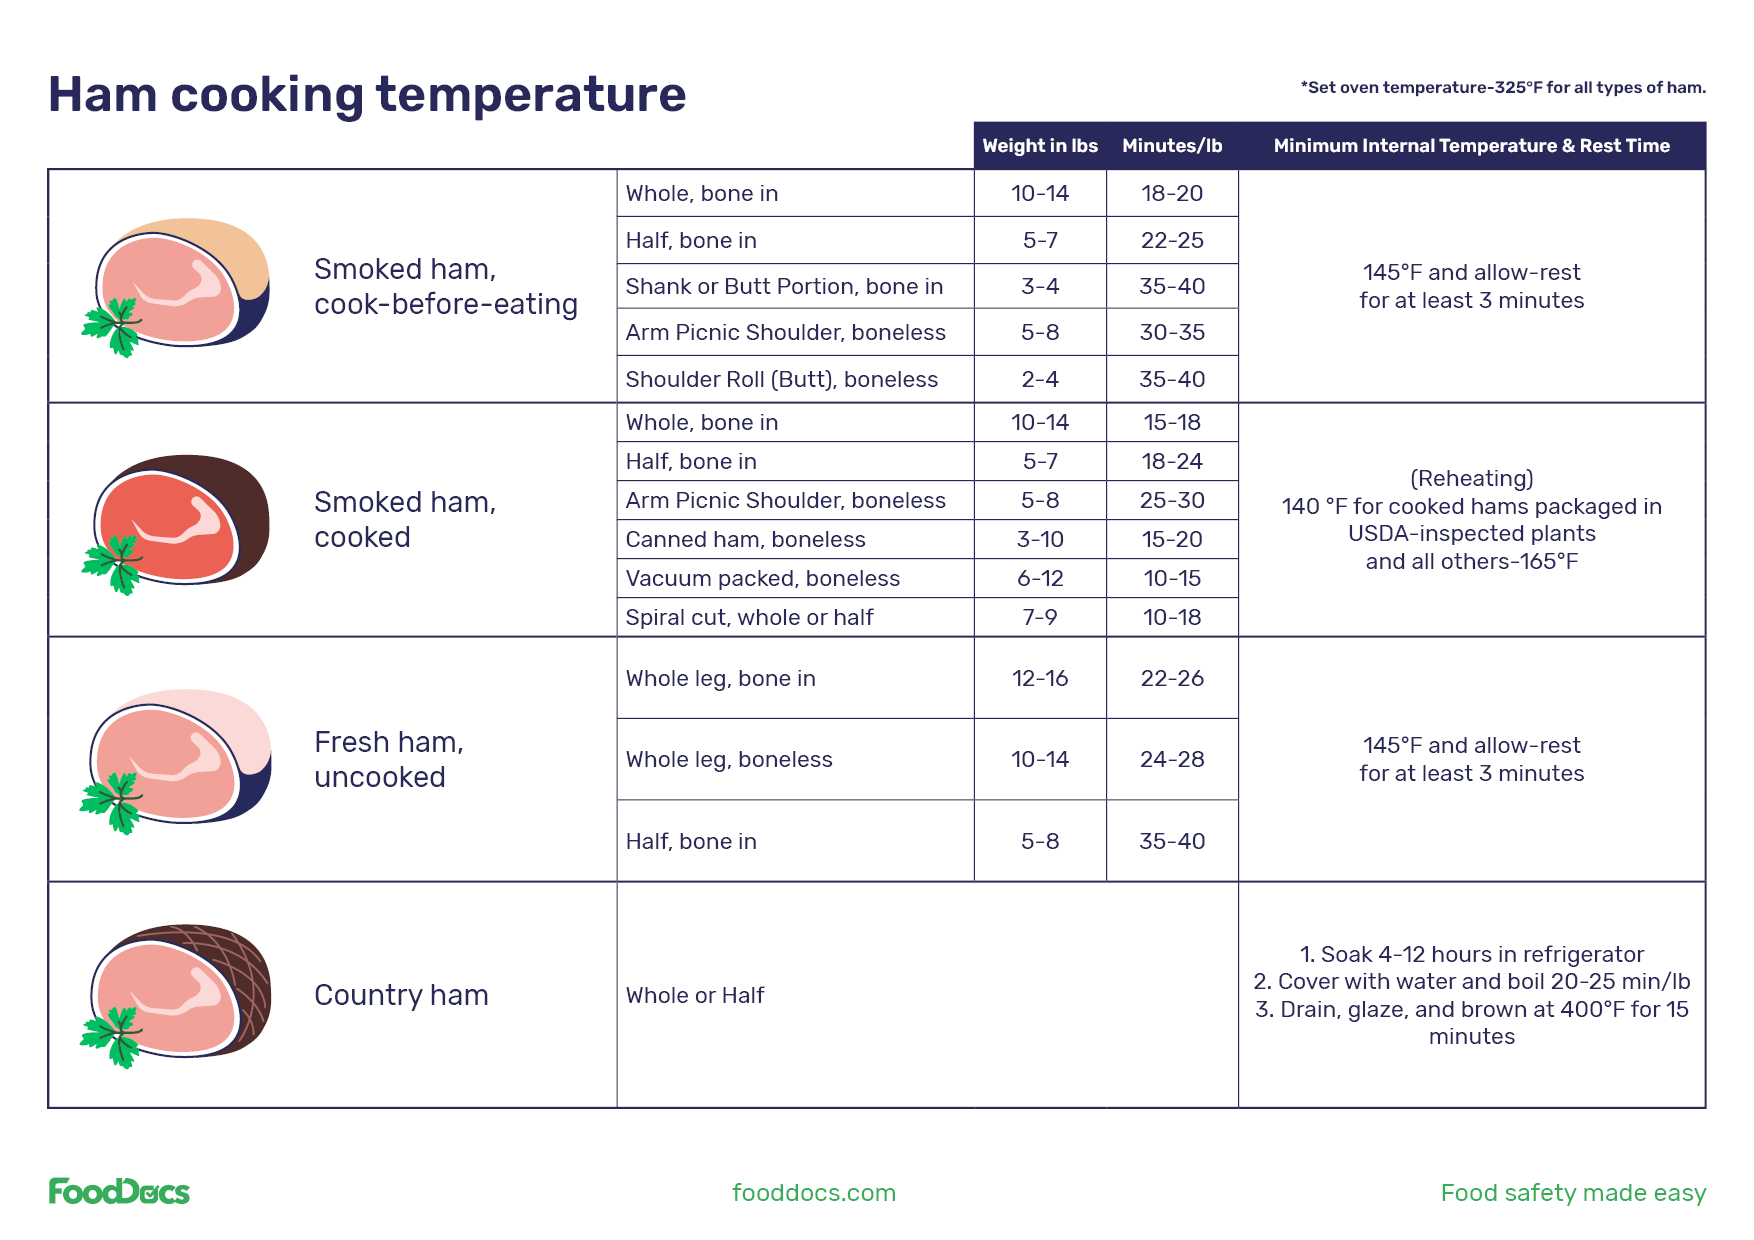 Internal Temperature Cooking Chart